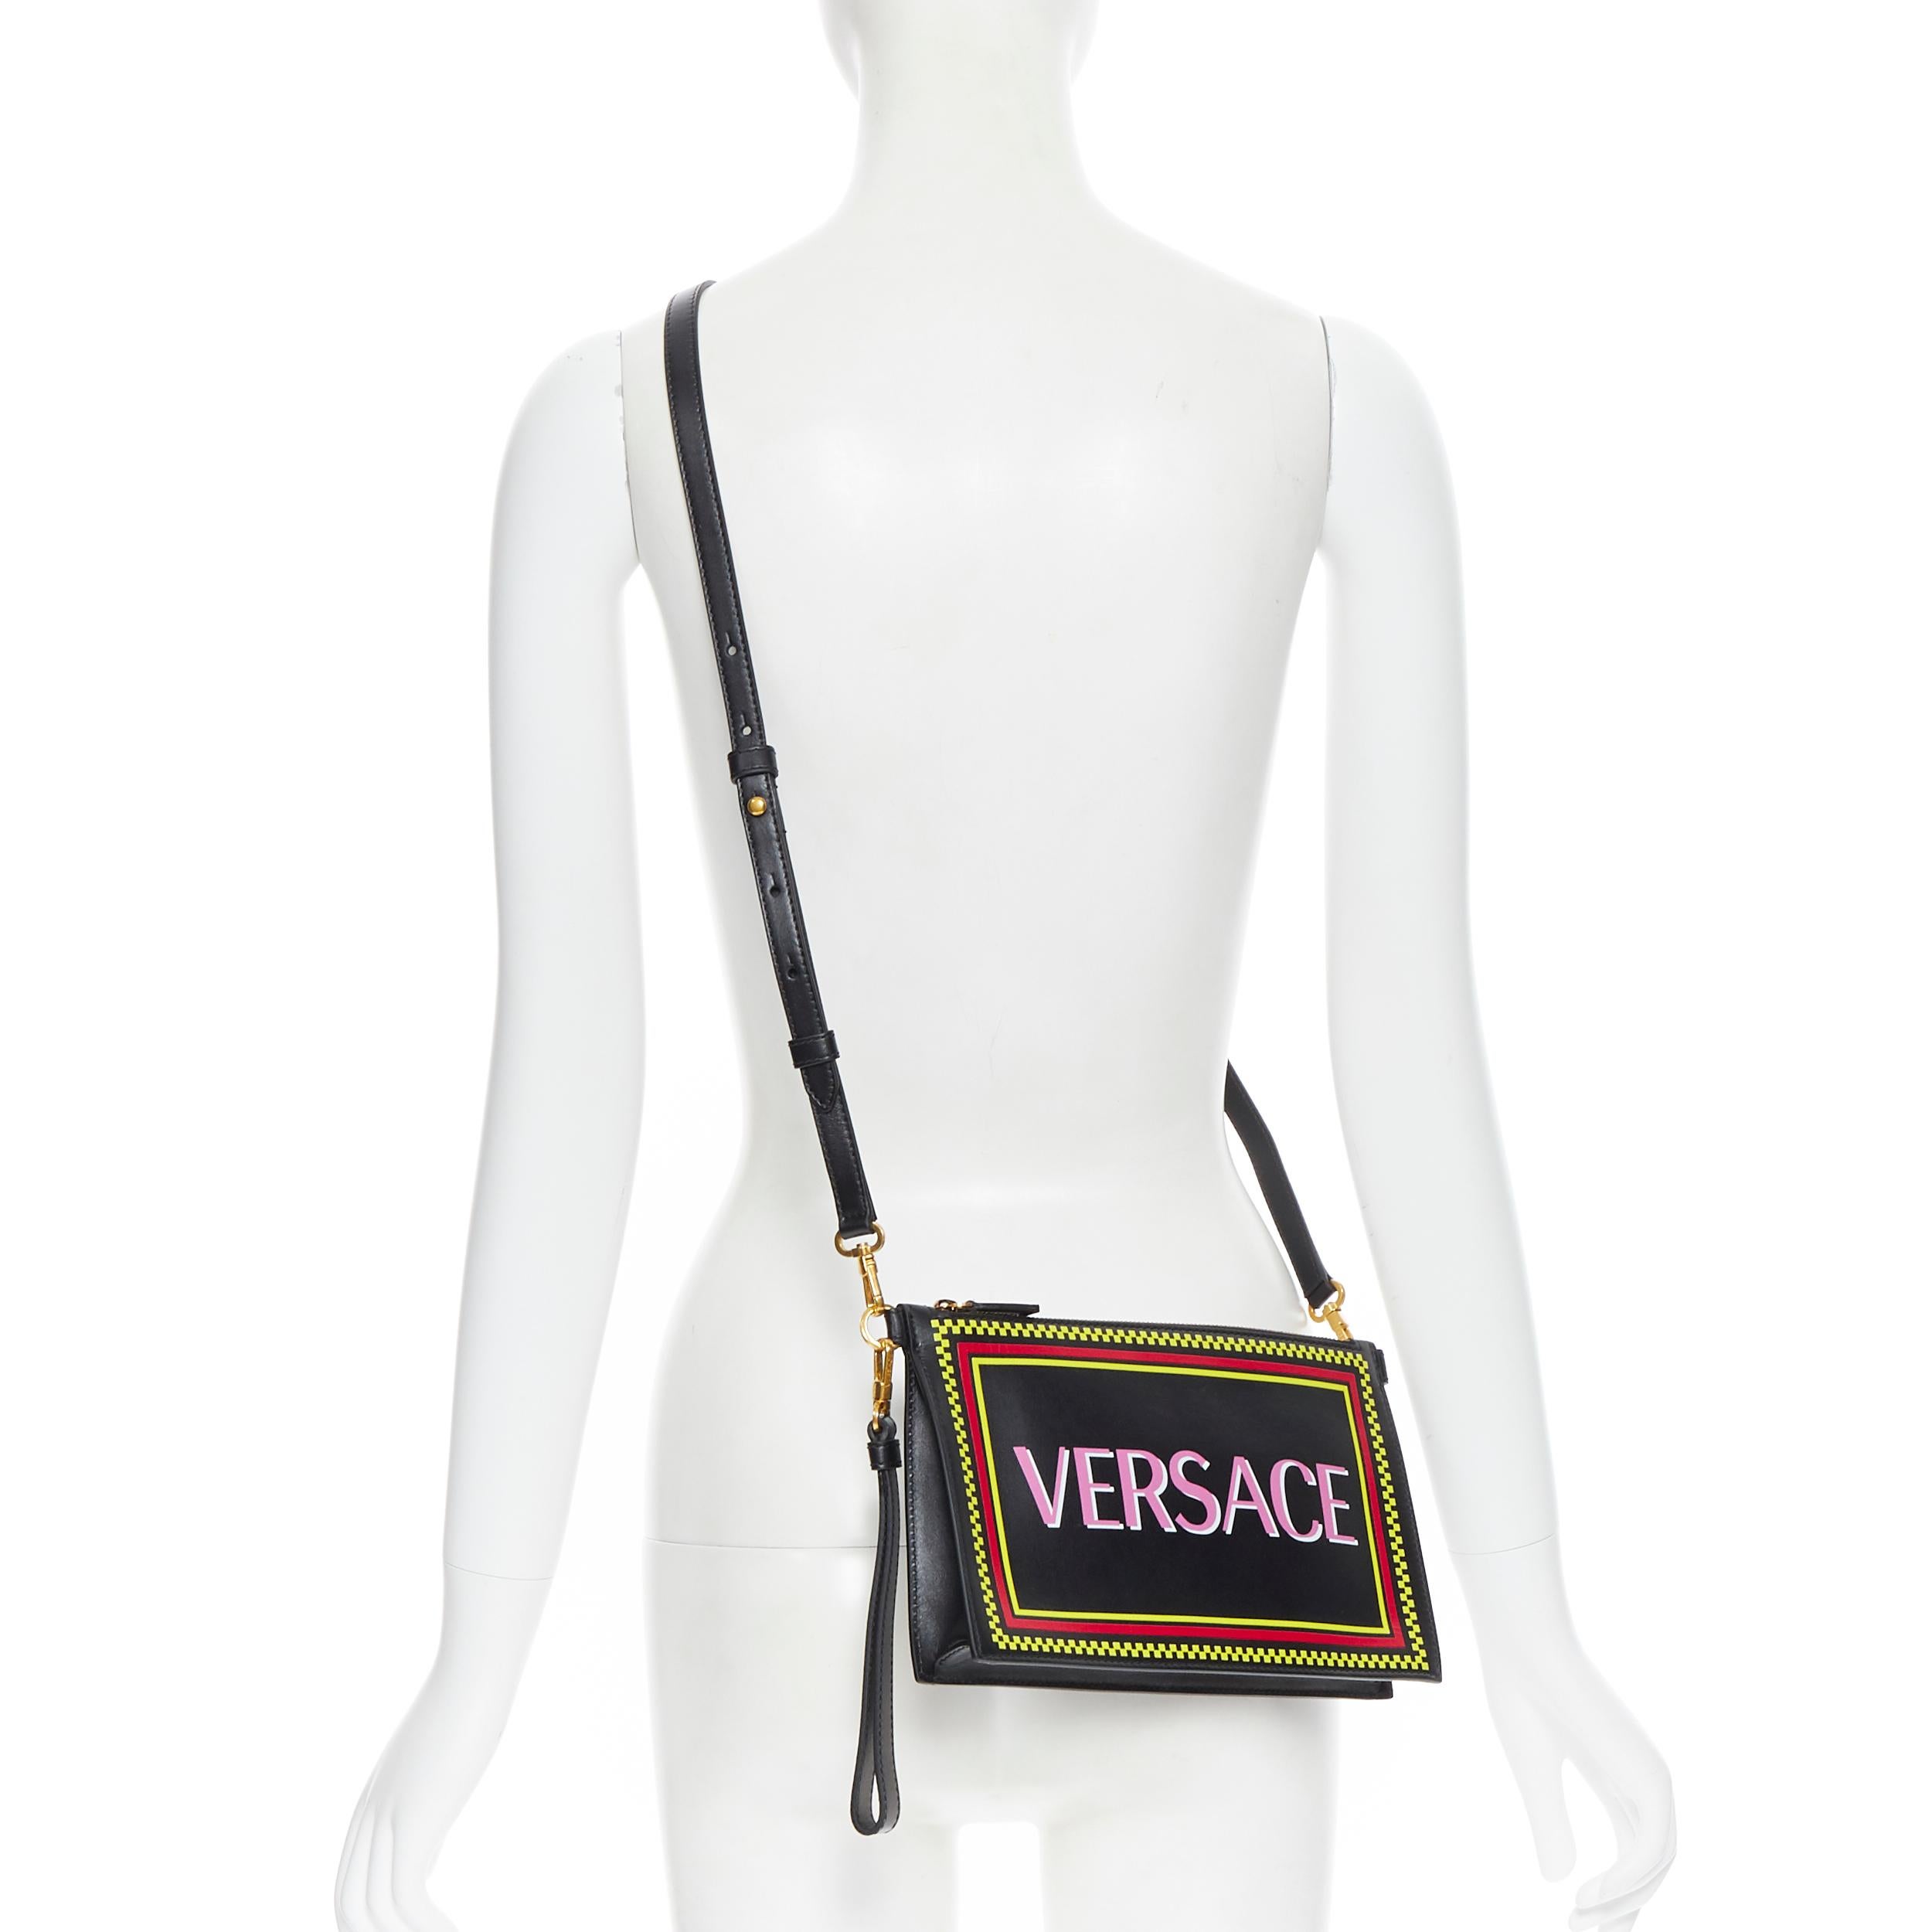 new VERSACE 90's Vintage logo black leather zip wristlet clutch crossbody bag
Brand: Versace
Designer: Donatella Versace
Collection: 2020
Model Name / Style: Crossbody clutch
Material: Leather
Color: Black
Pattern: Solid
Extra Detail: 90's logo